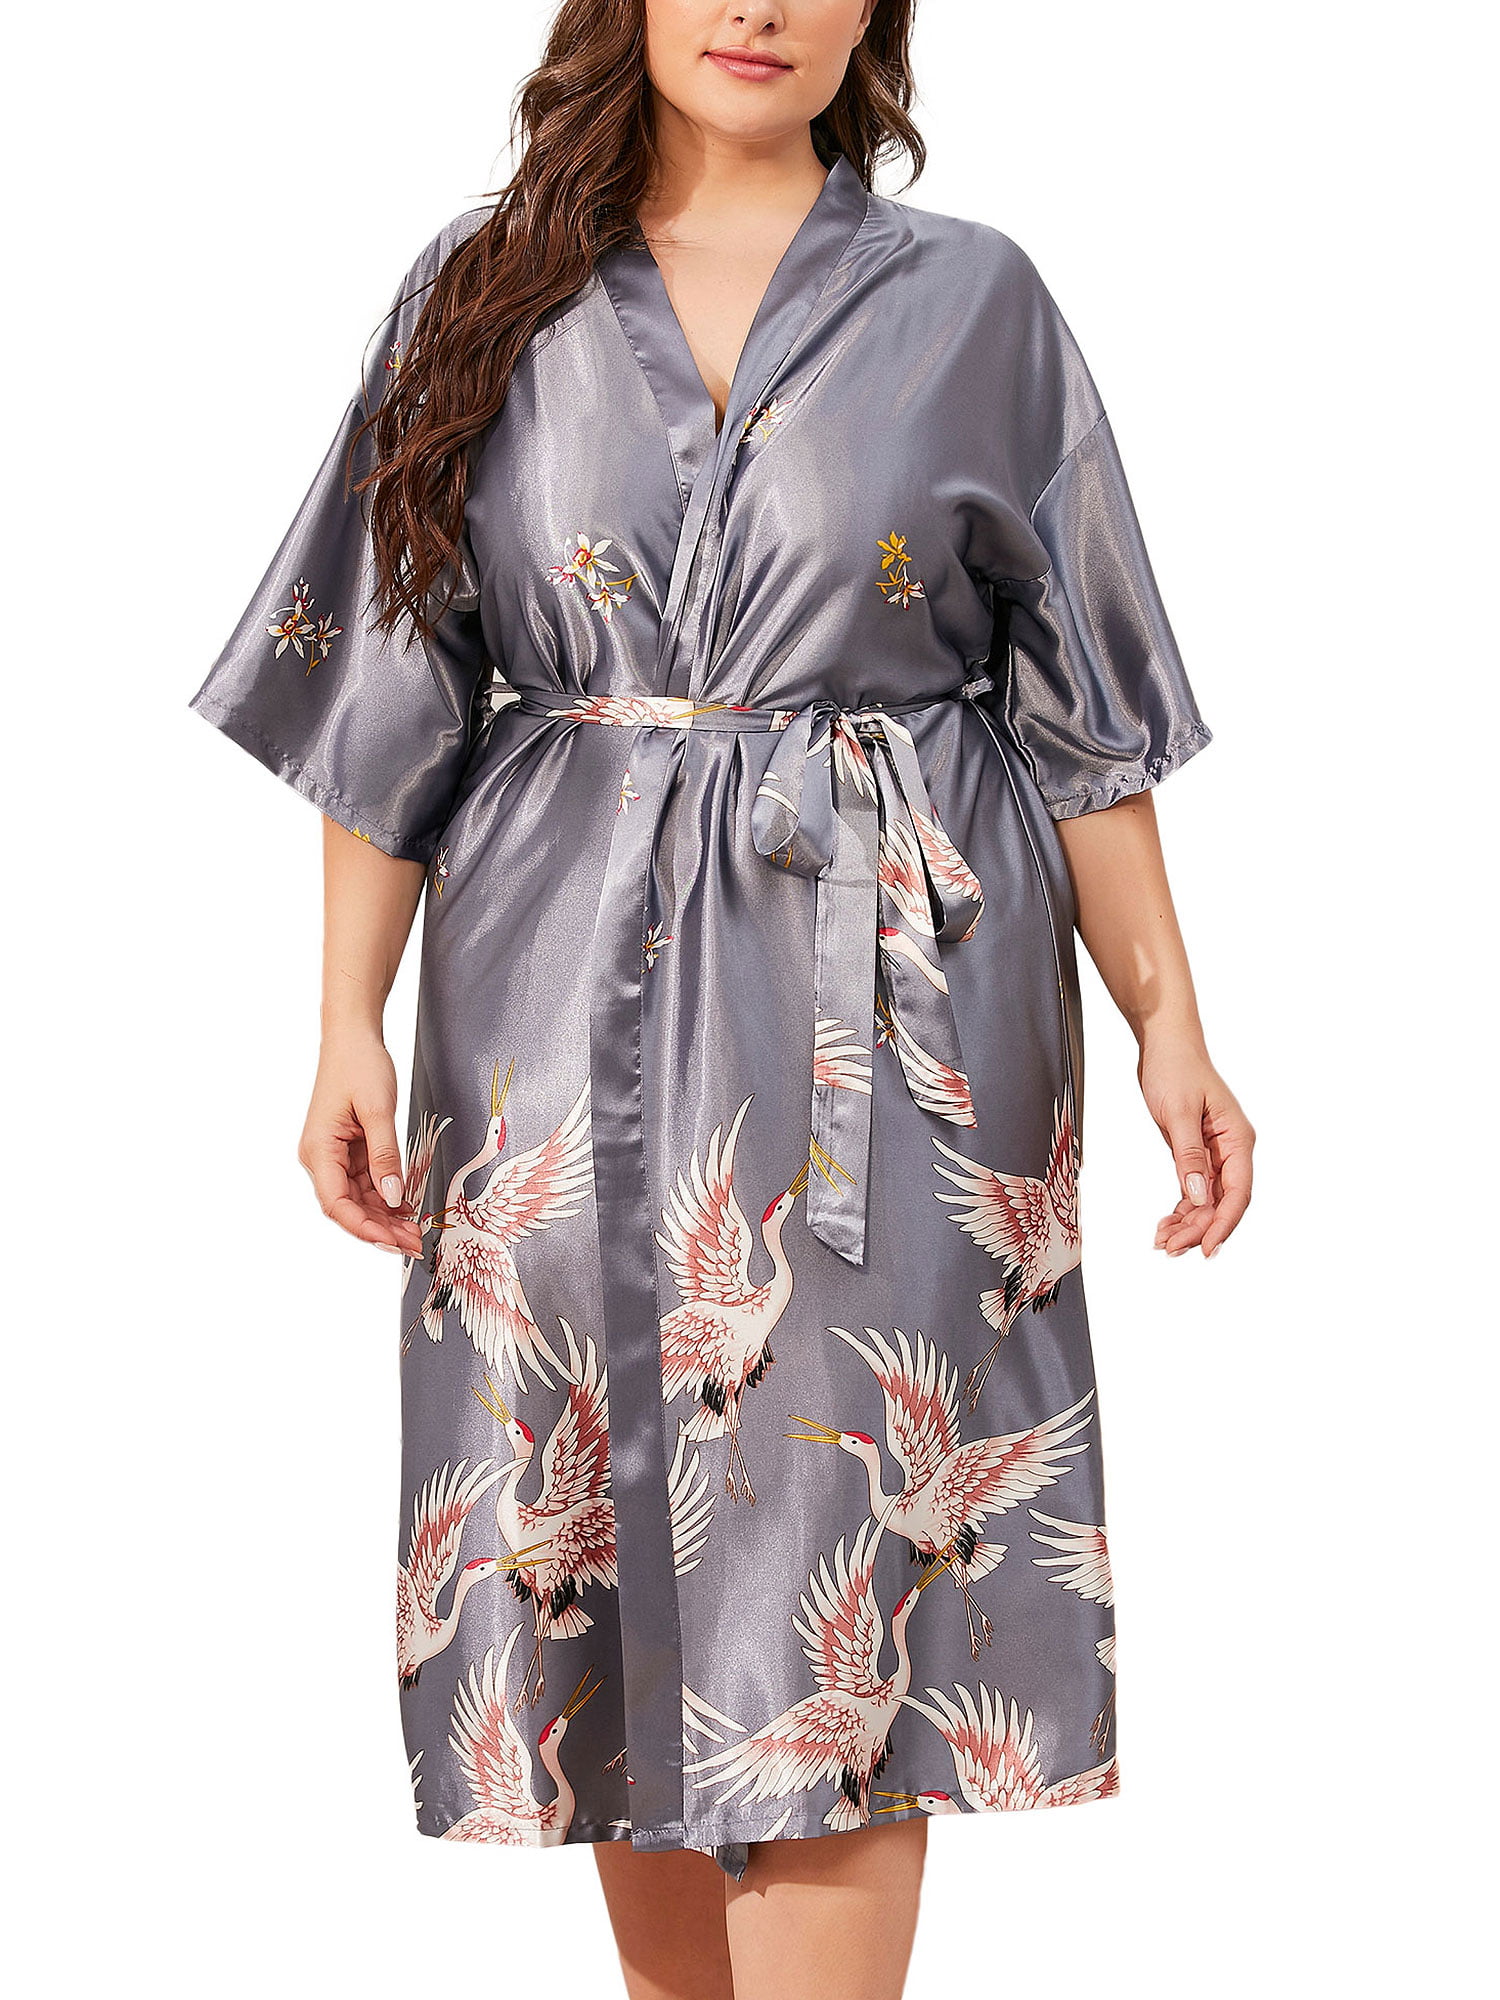 Bathrobe for Men Long Style Asskyus Men’s Lightweight Satin Sleep Robe Kimono Gown